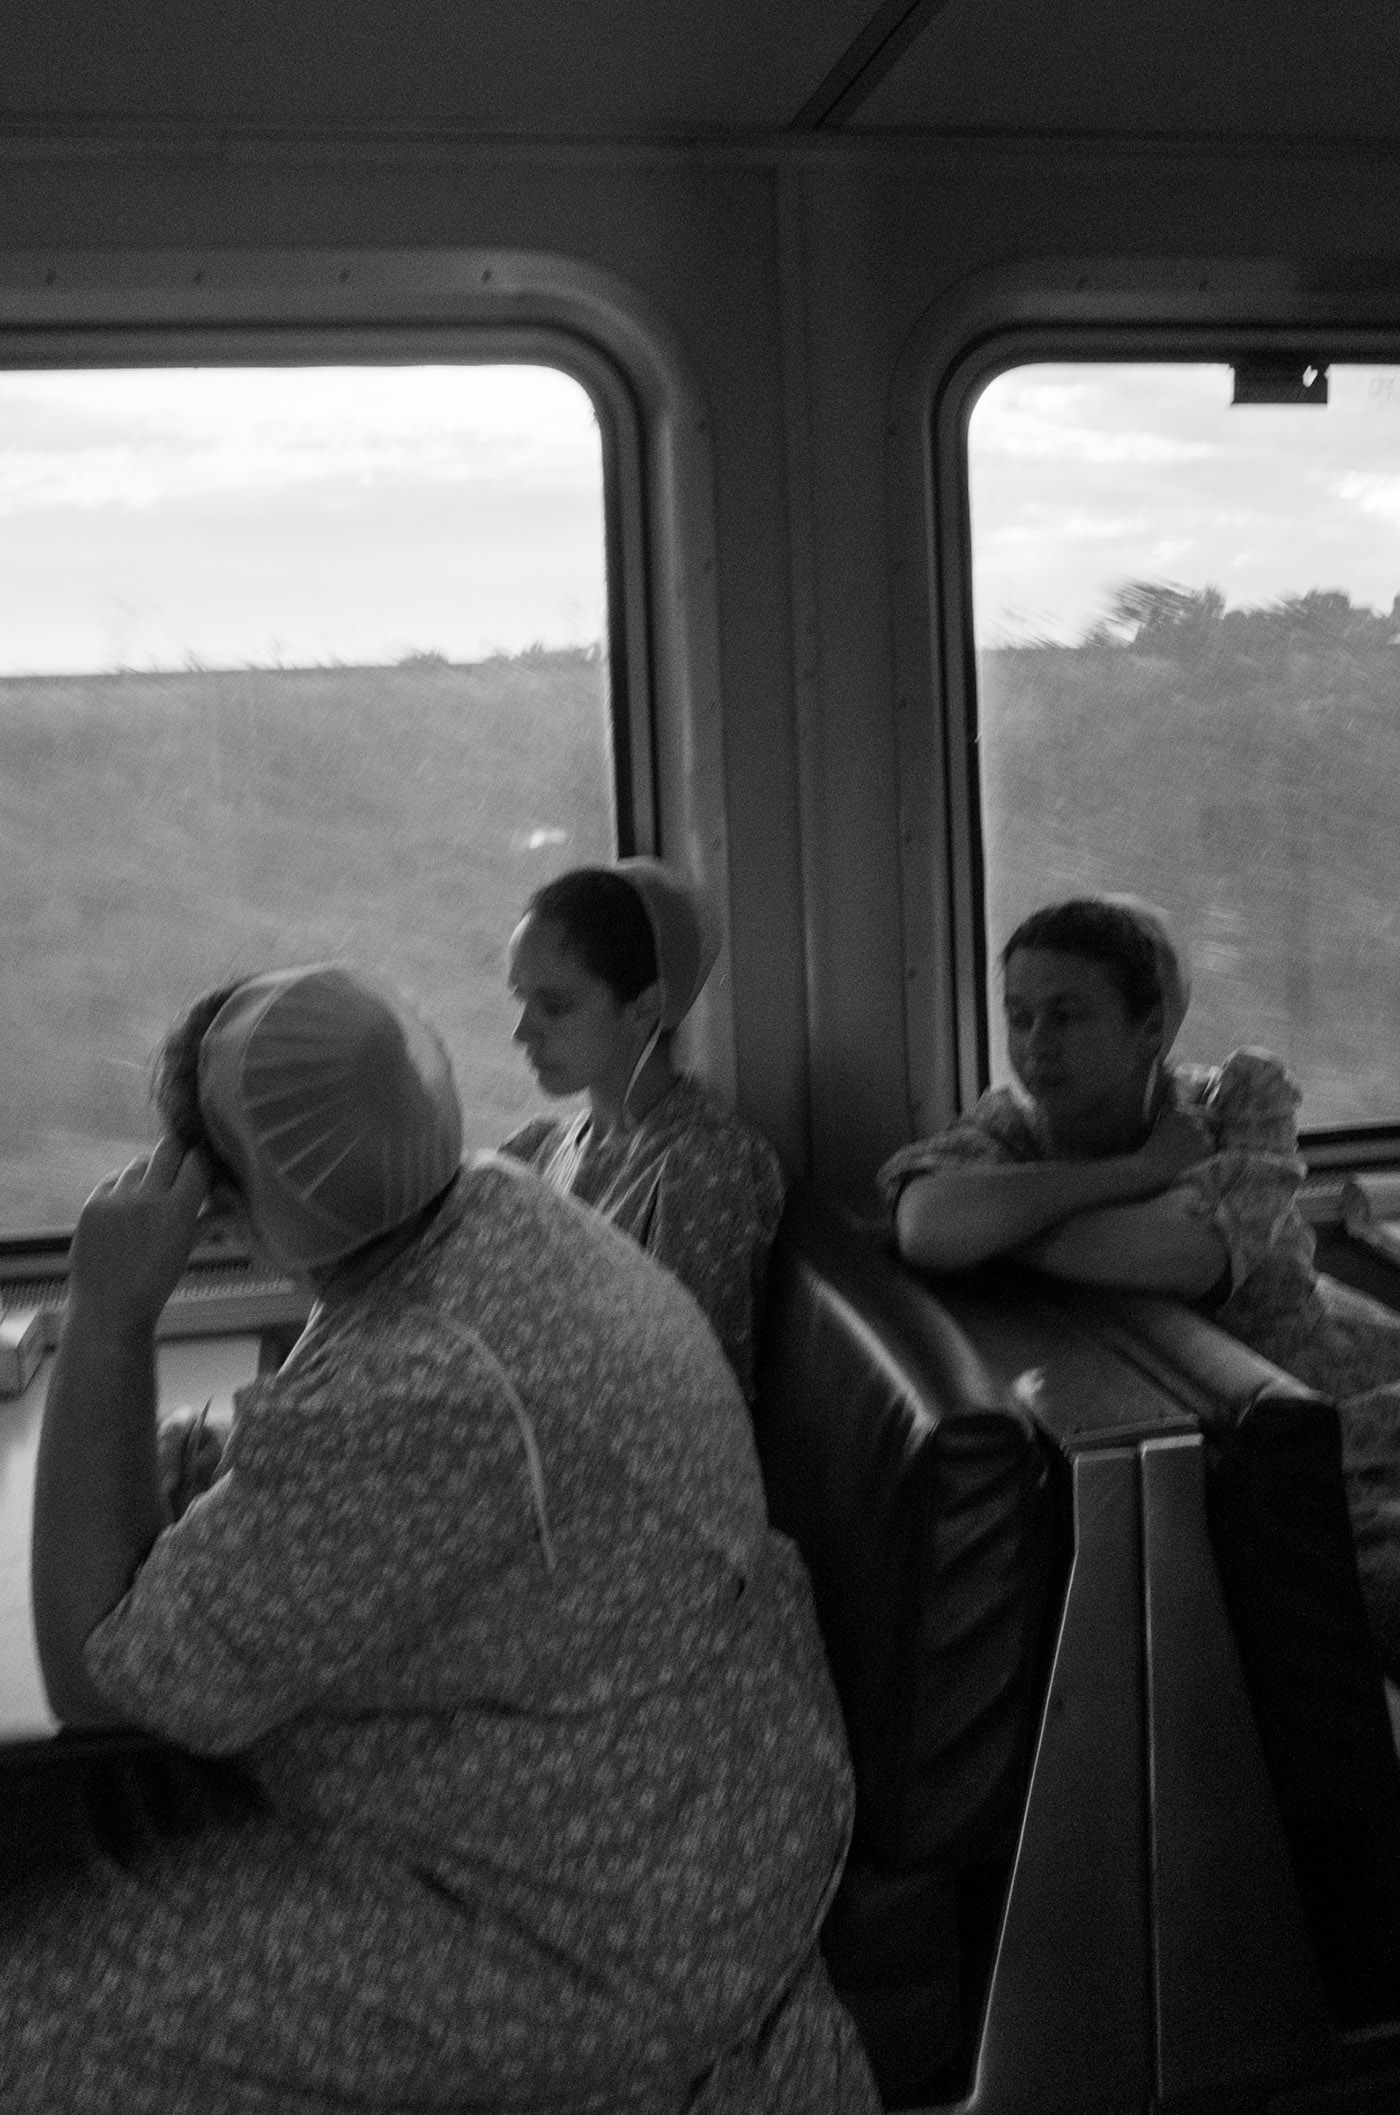 Transcontinental fernando pereira gomes amtrak train journey Documentary  america Landscape